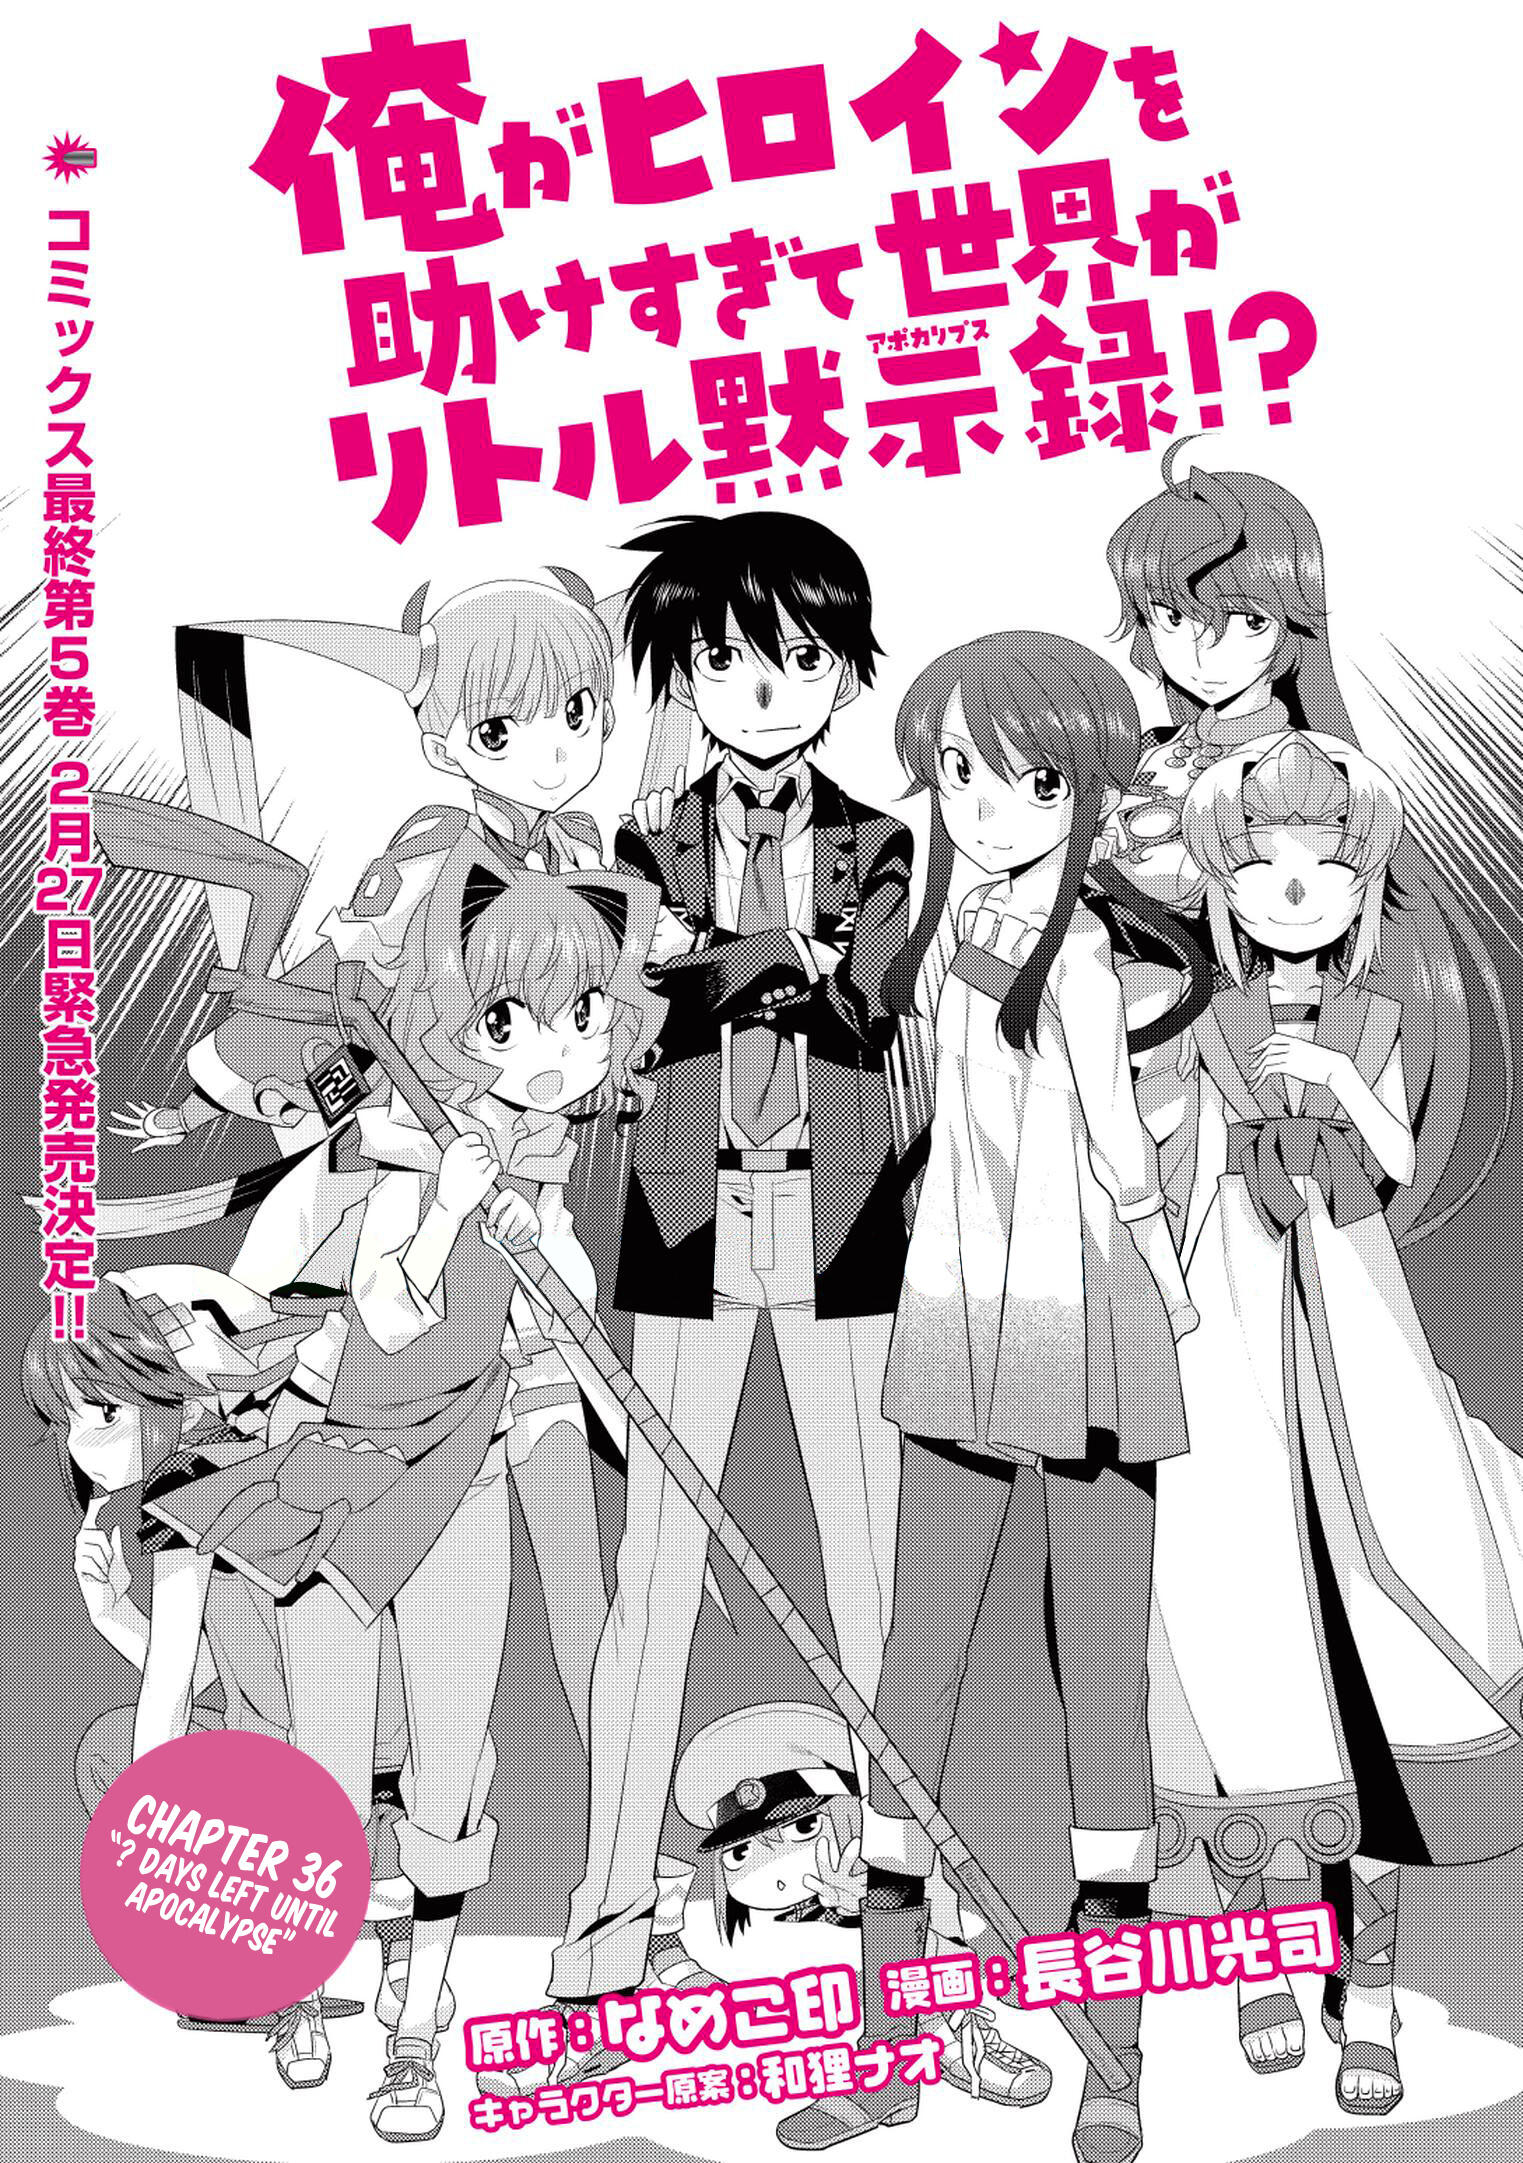 Kissmanga Read Manga Ore Ga Heroine O Tasukesugite Sekai Ga Little Mokushiroku Chapter Vol 5 Chapter 33 Days Left Until Apocalypse